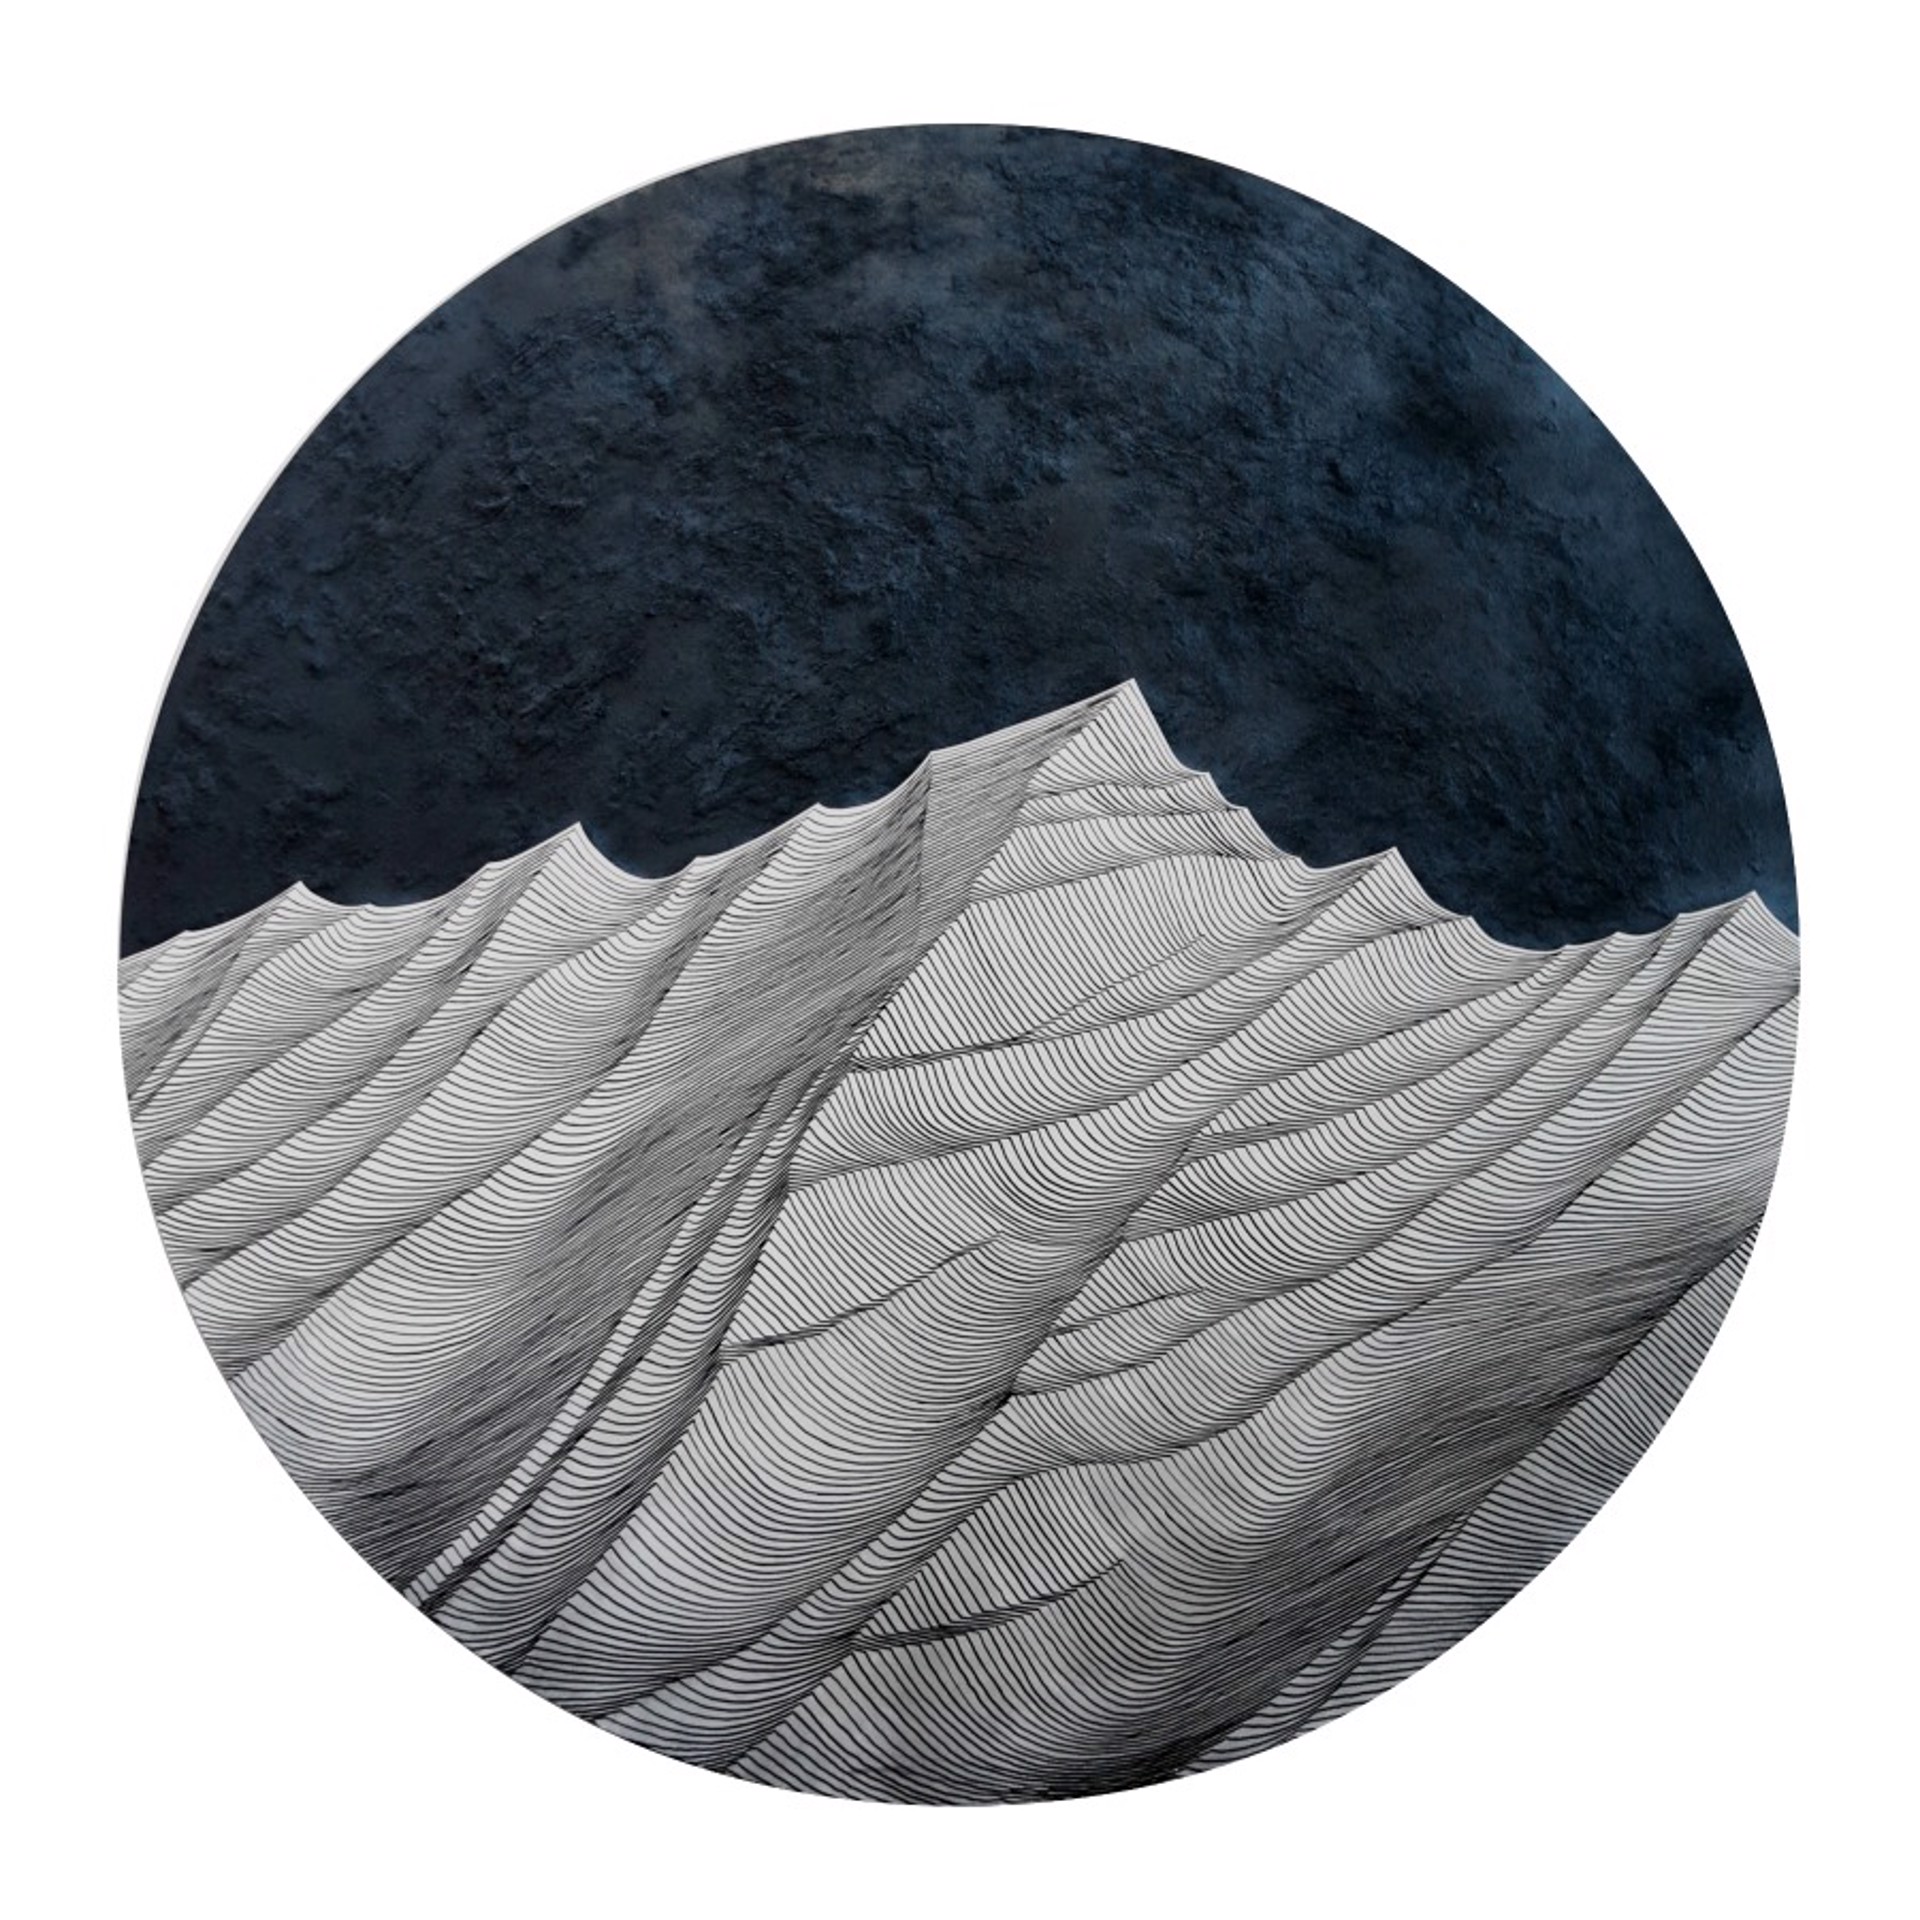 Dark Moon Rise by Havoc Hendricks